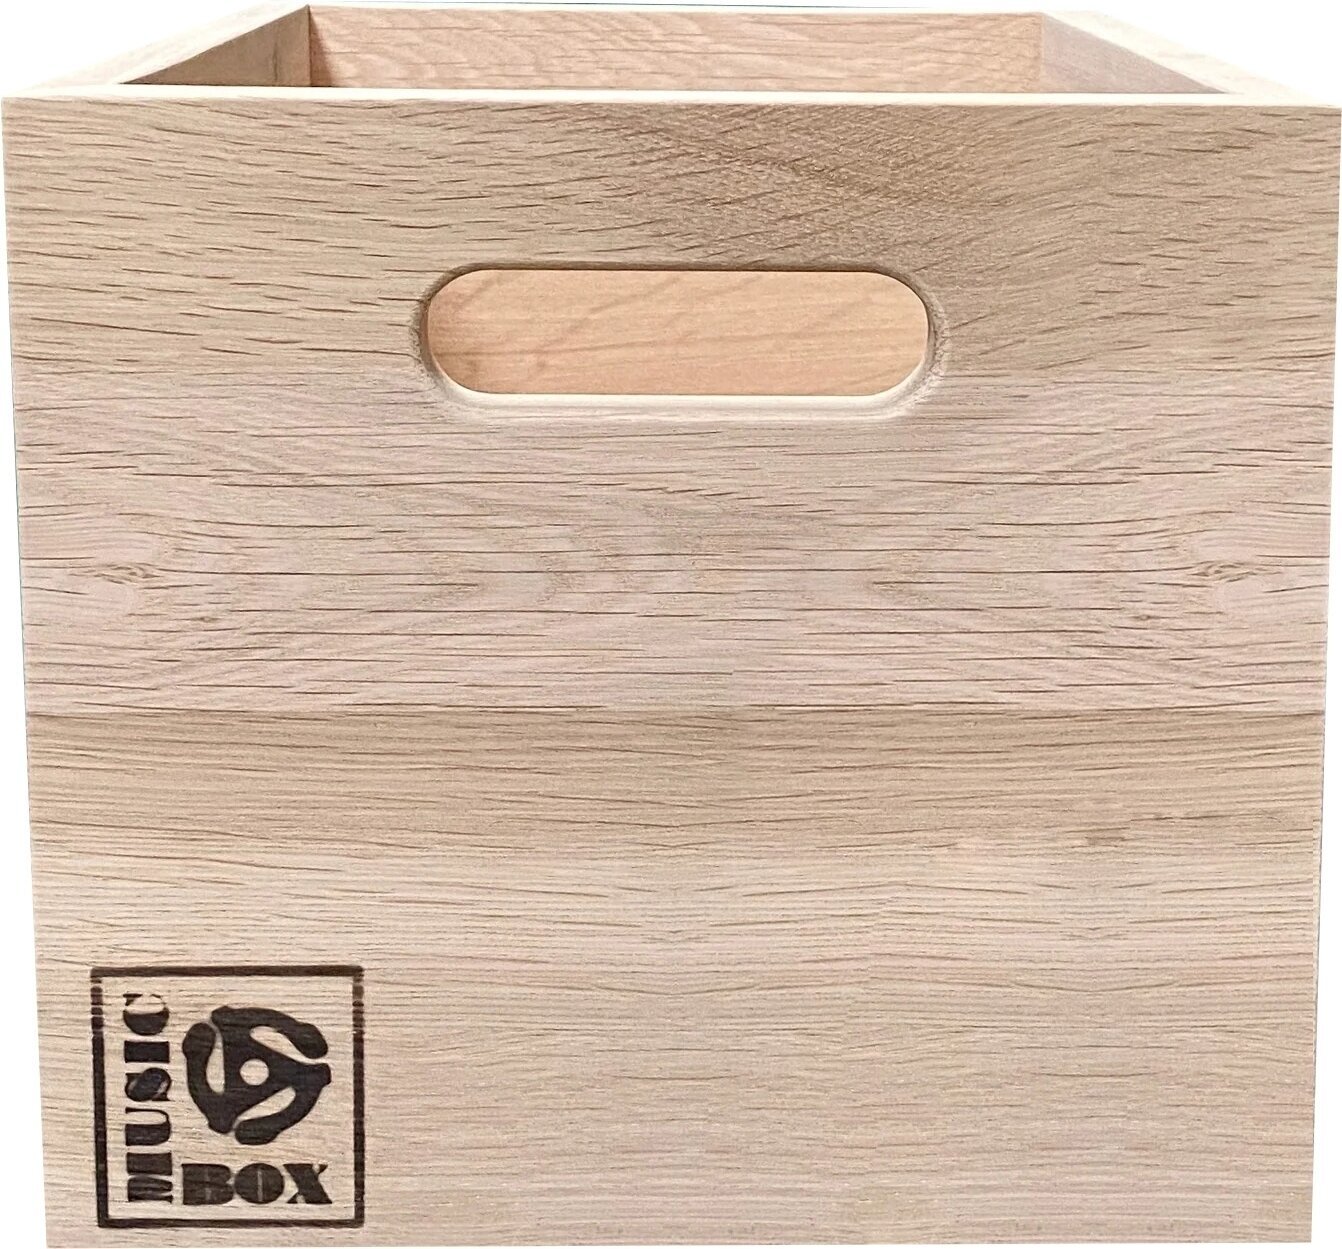 Vinyl Record Box Music Box Designs 7 inch Vinyl Storage Box- ‘Singles Going Steady' Natural Oak